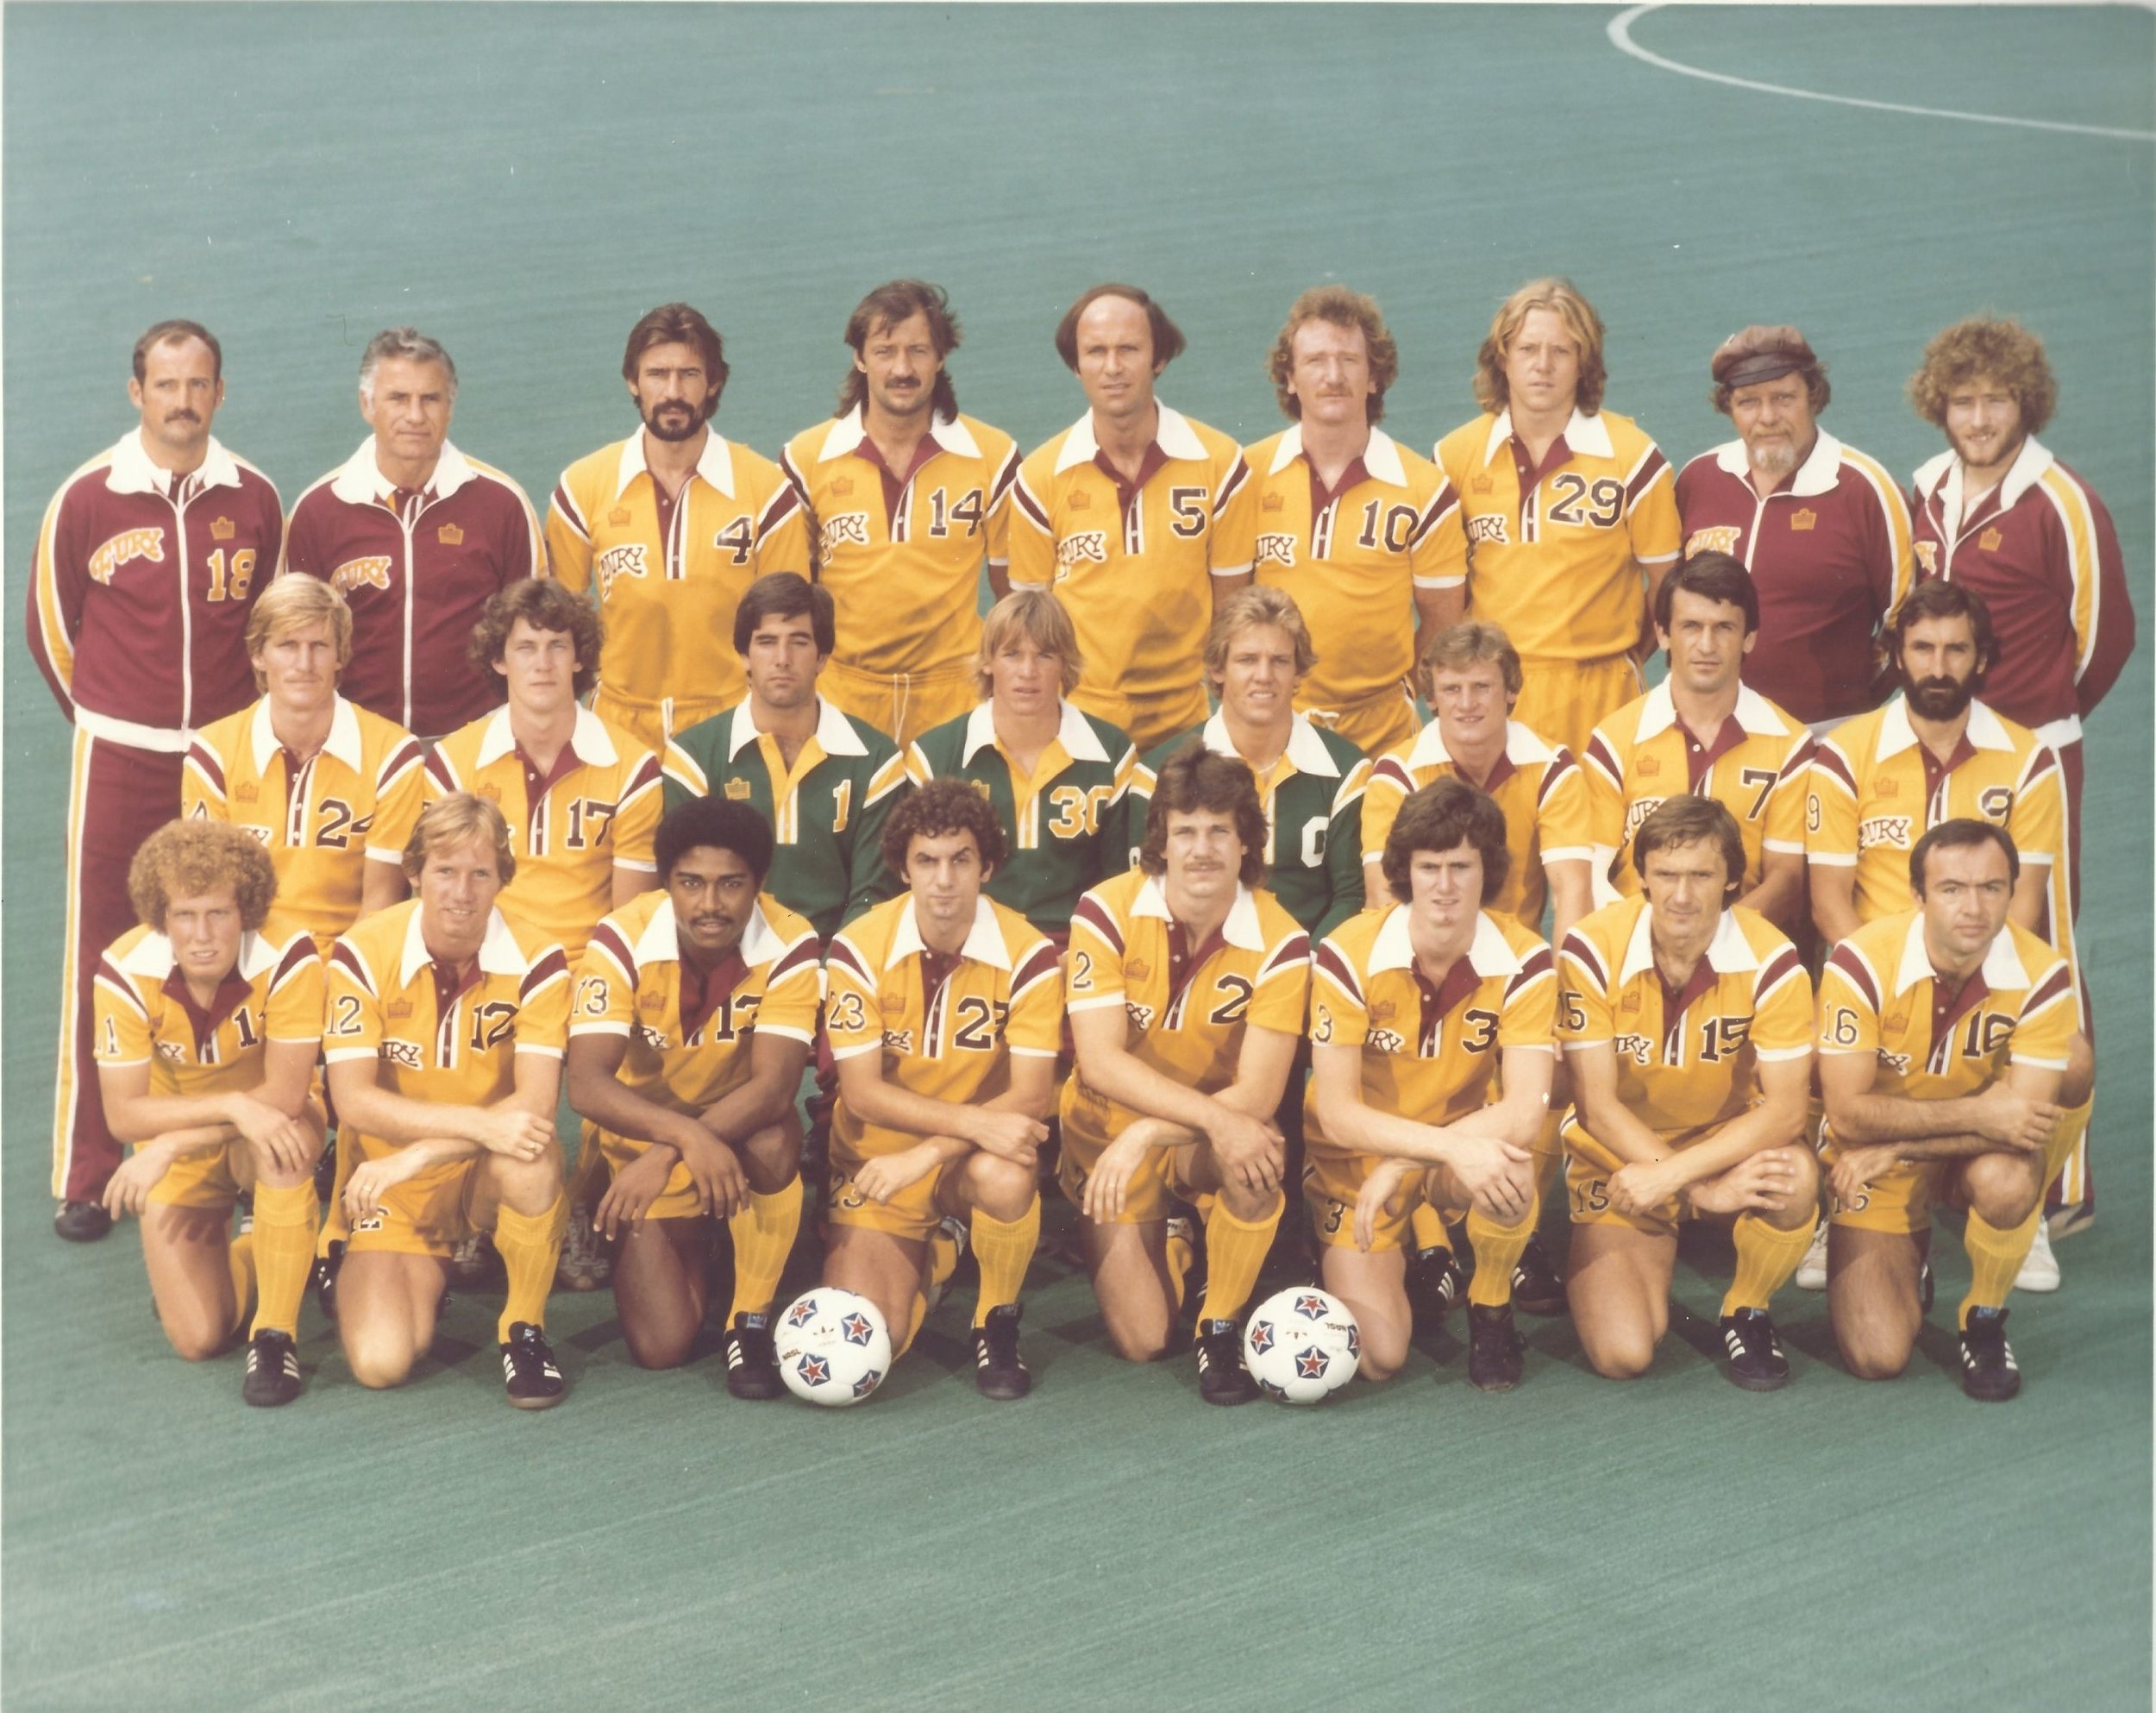 1979 Phila Fury Team Picture.jpg